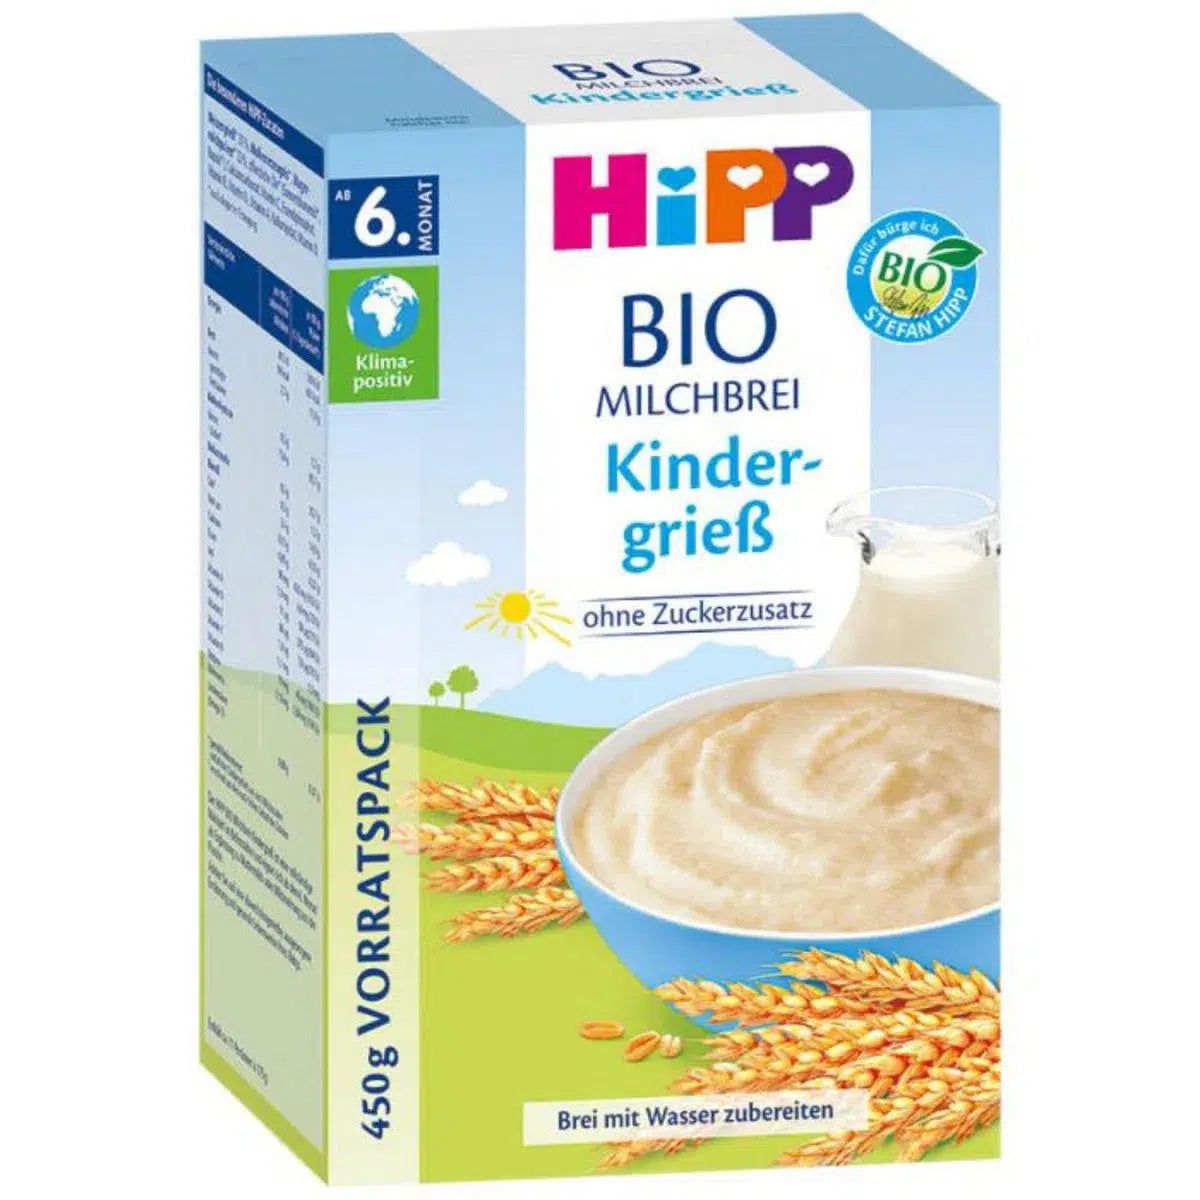 Hipp organic porridge 100% rice - Organic Baby Food 